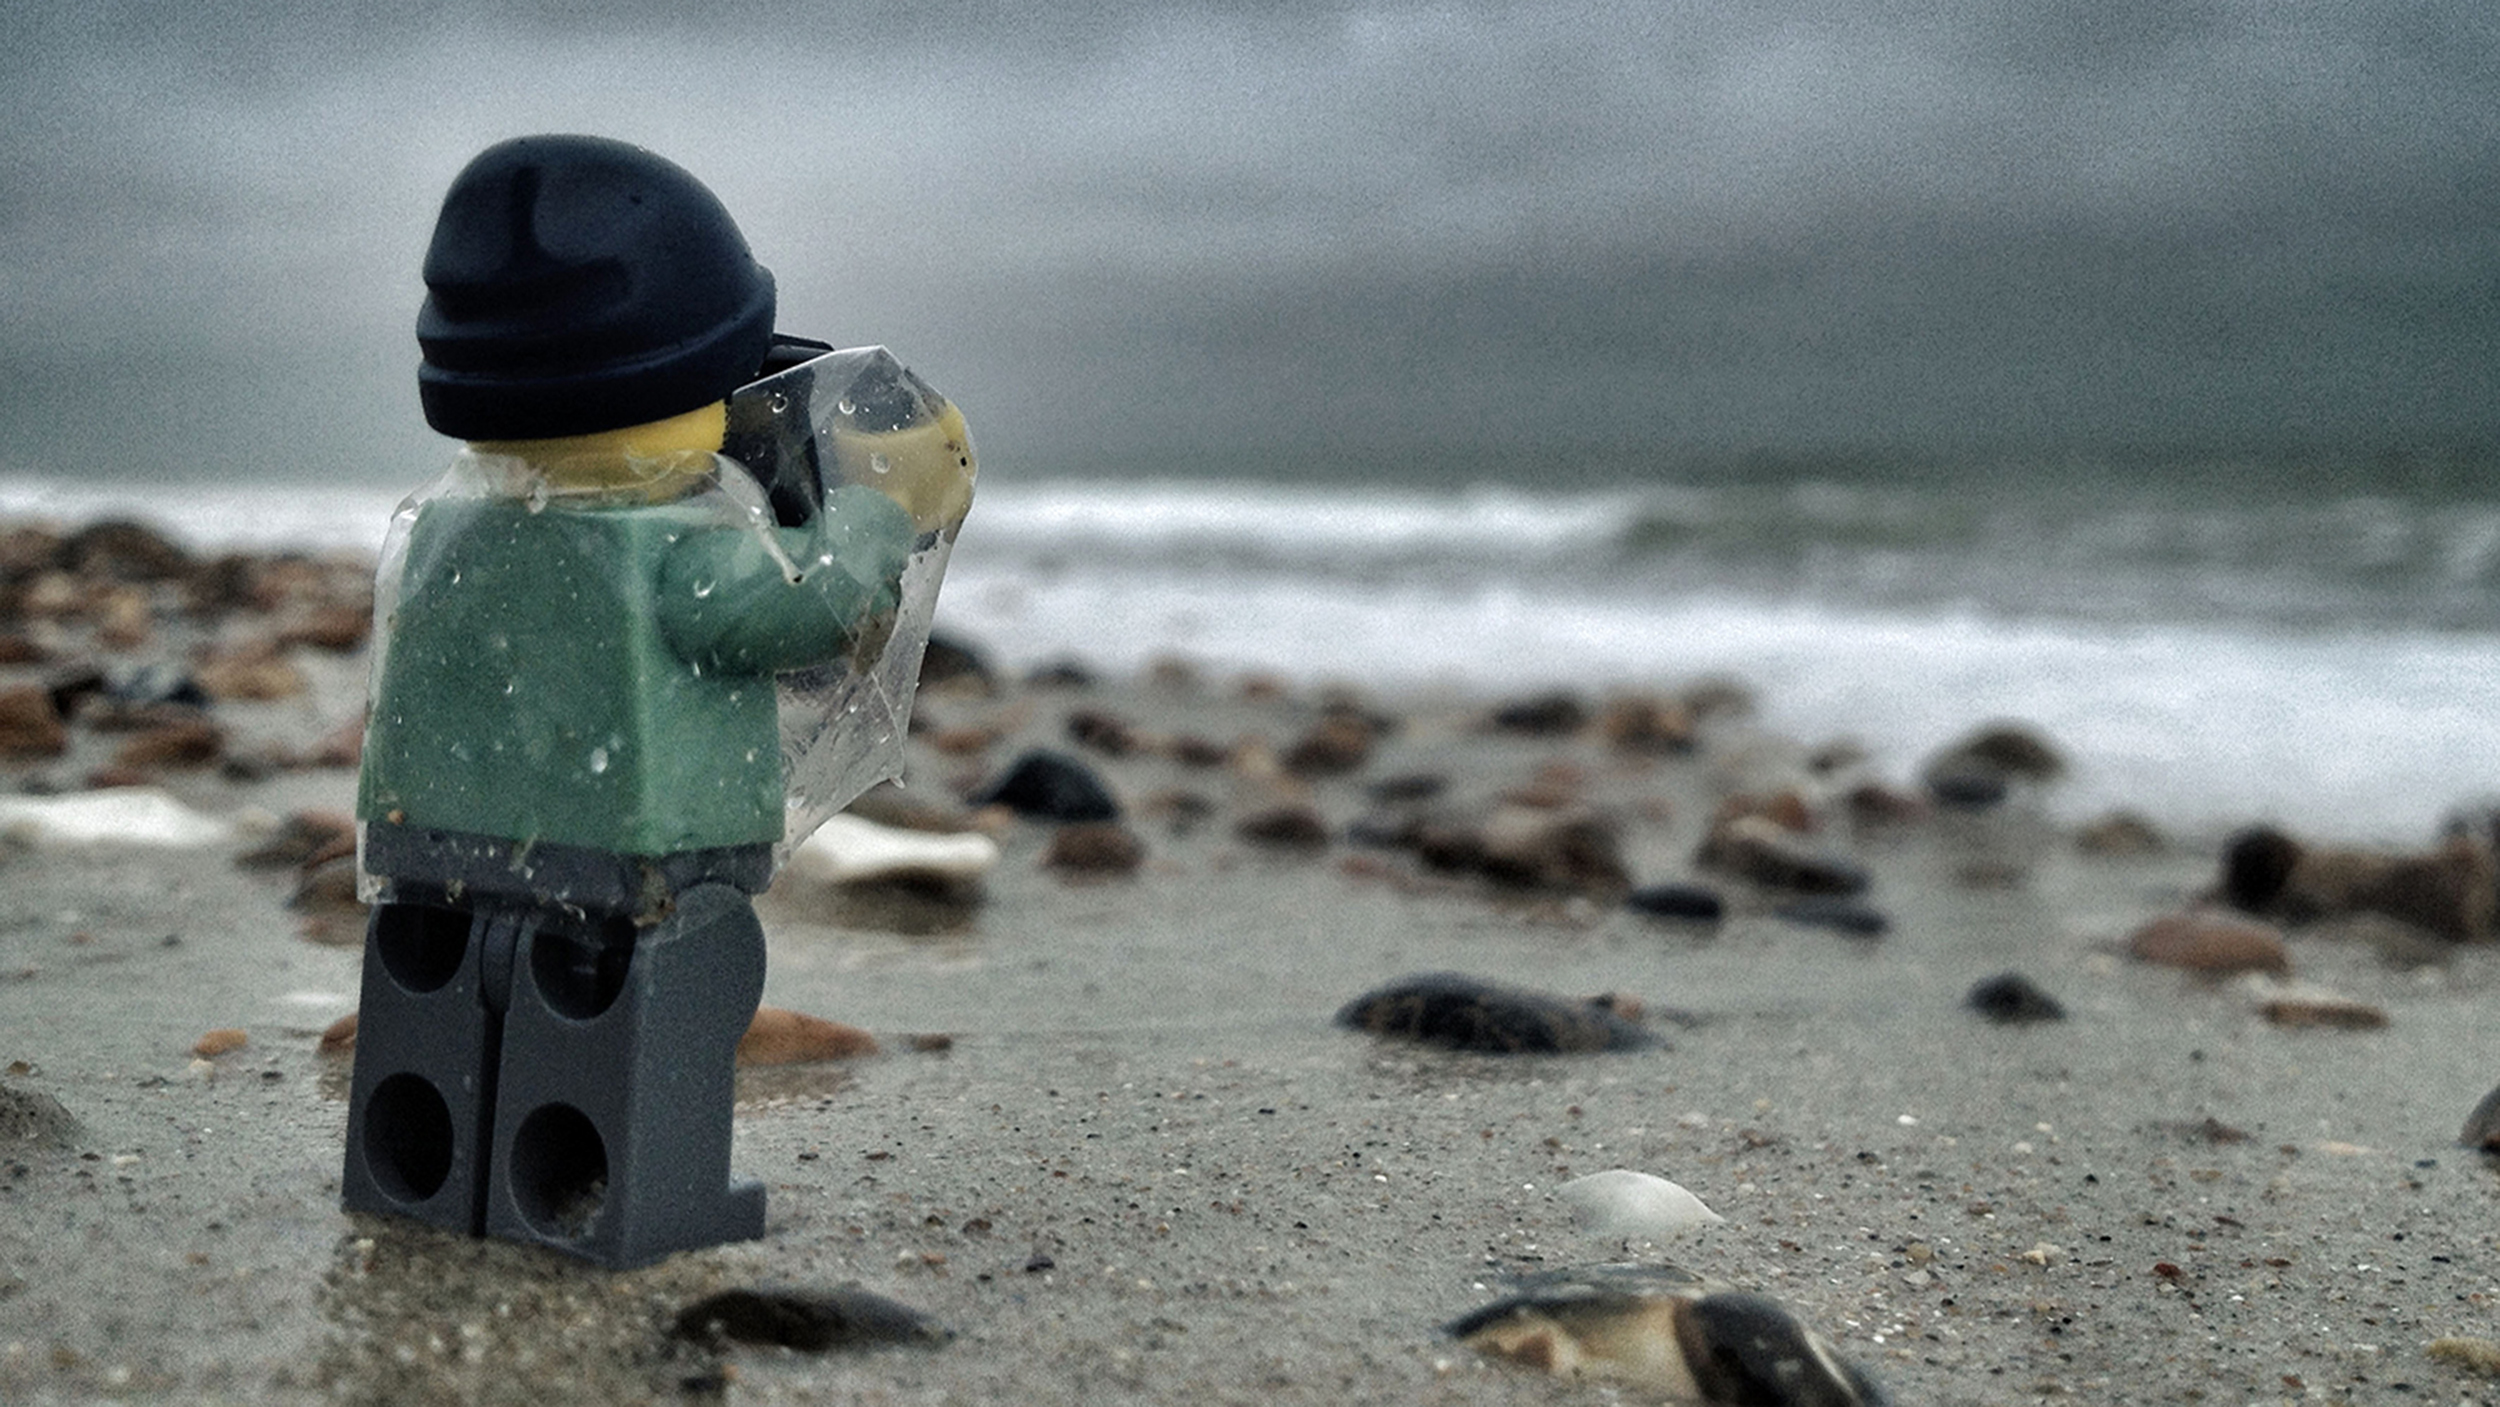 LEGO Boy Man Minifigure & Camera Photographer Holiday Maker 